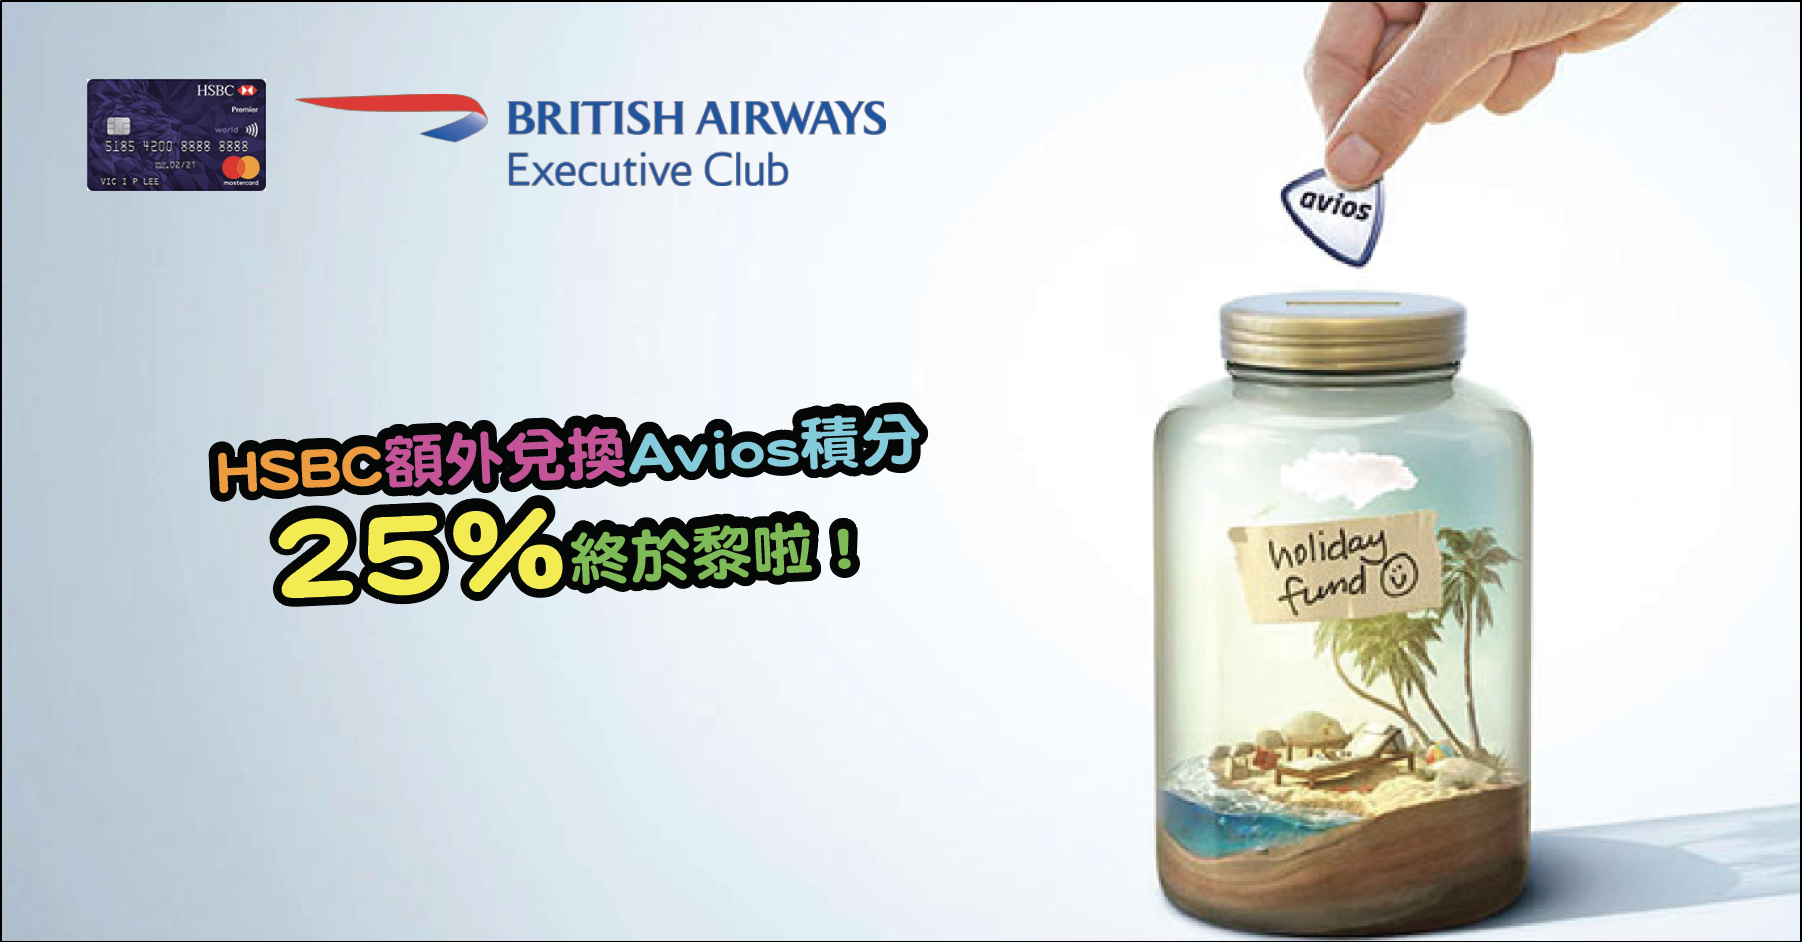 【HSBC信用卡兌換Avios優惠】「獎賞錢」轉換成英航會員俱樂部 Executive Club Avios 有25%額外Avios積分！1「獎賞錢」= 25 Avios積分！